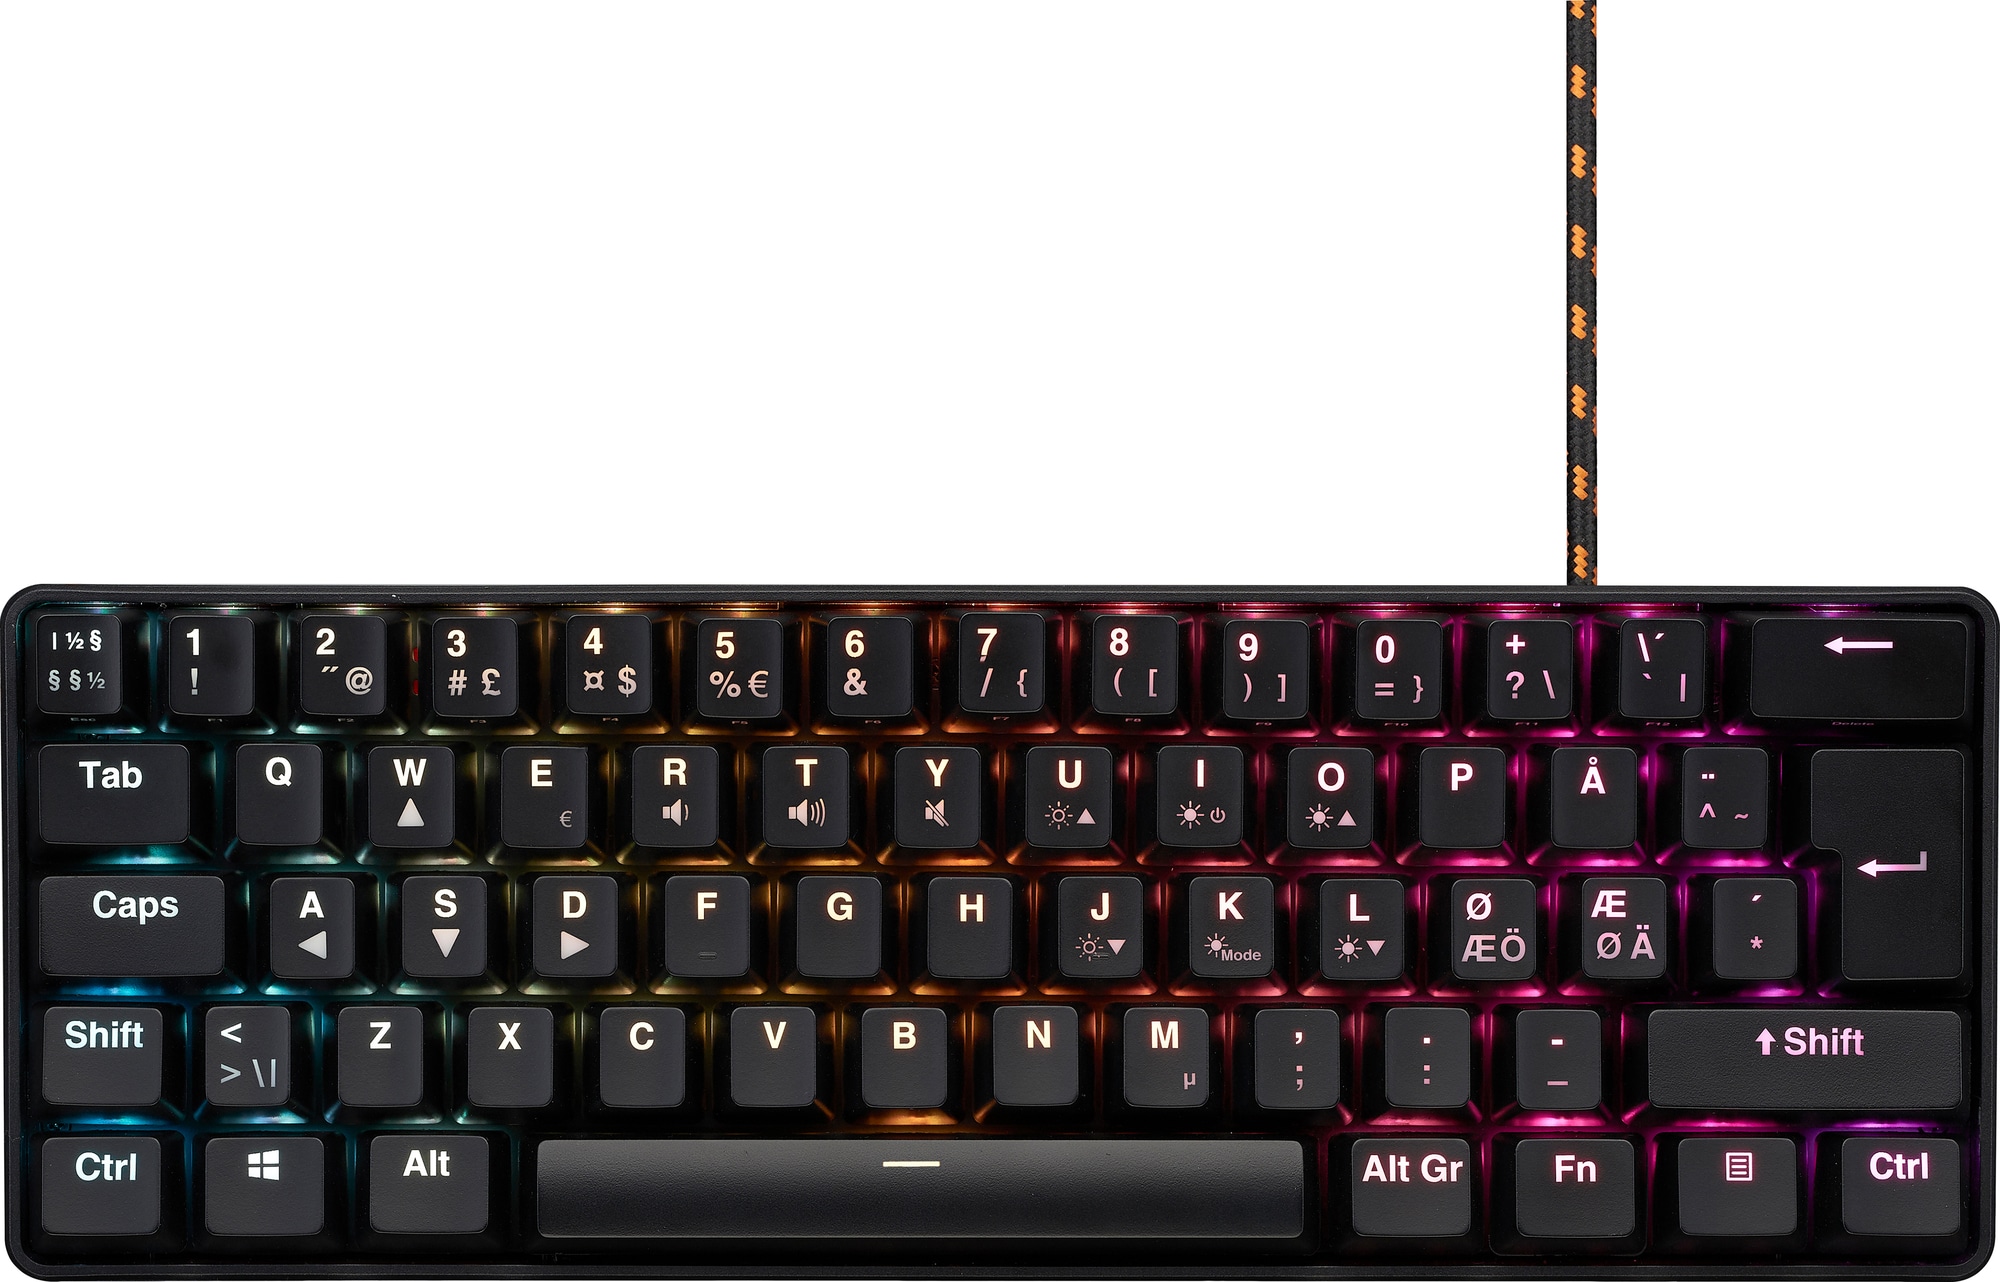 ADX kompakt RGB mekanisk gaming tastatur | Elgiganten